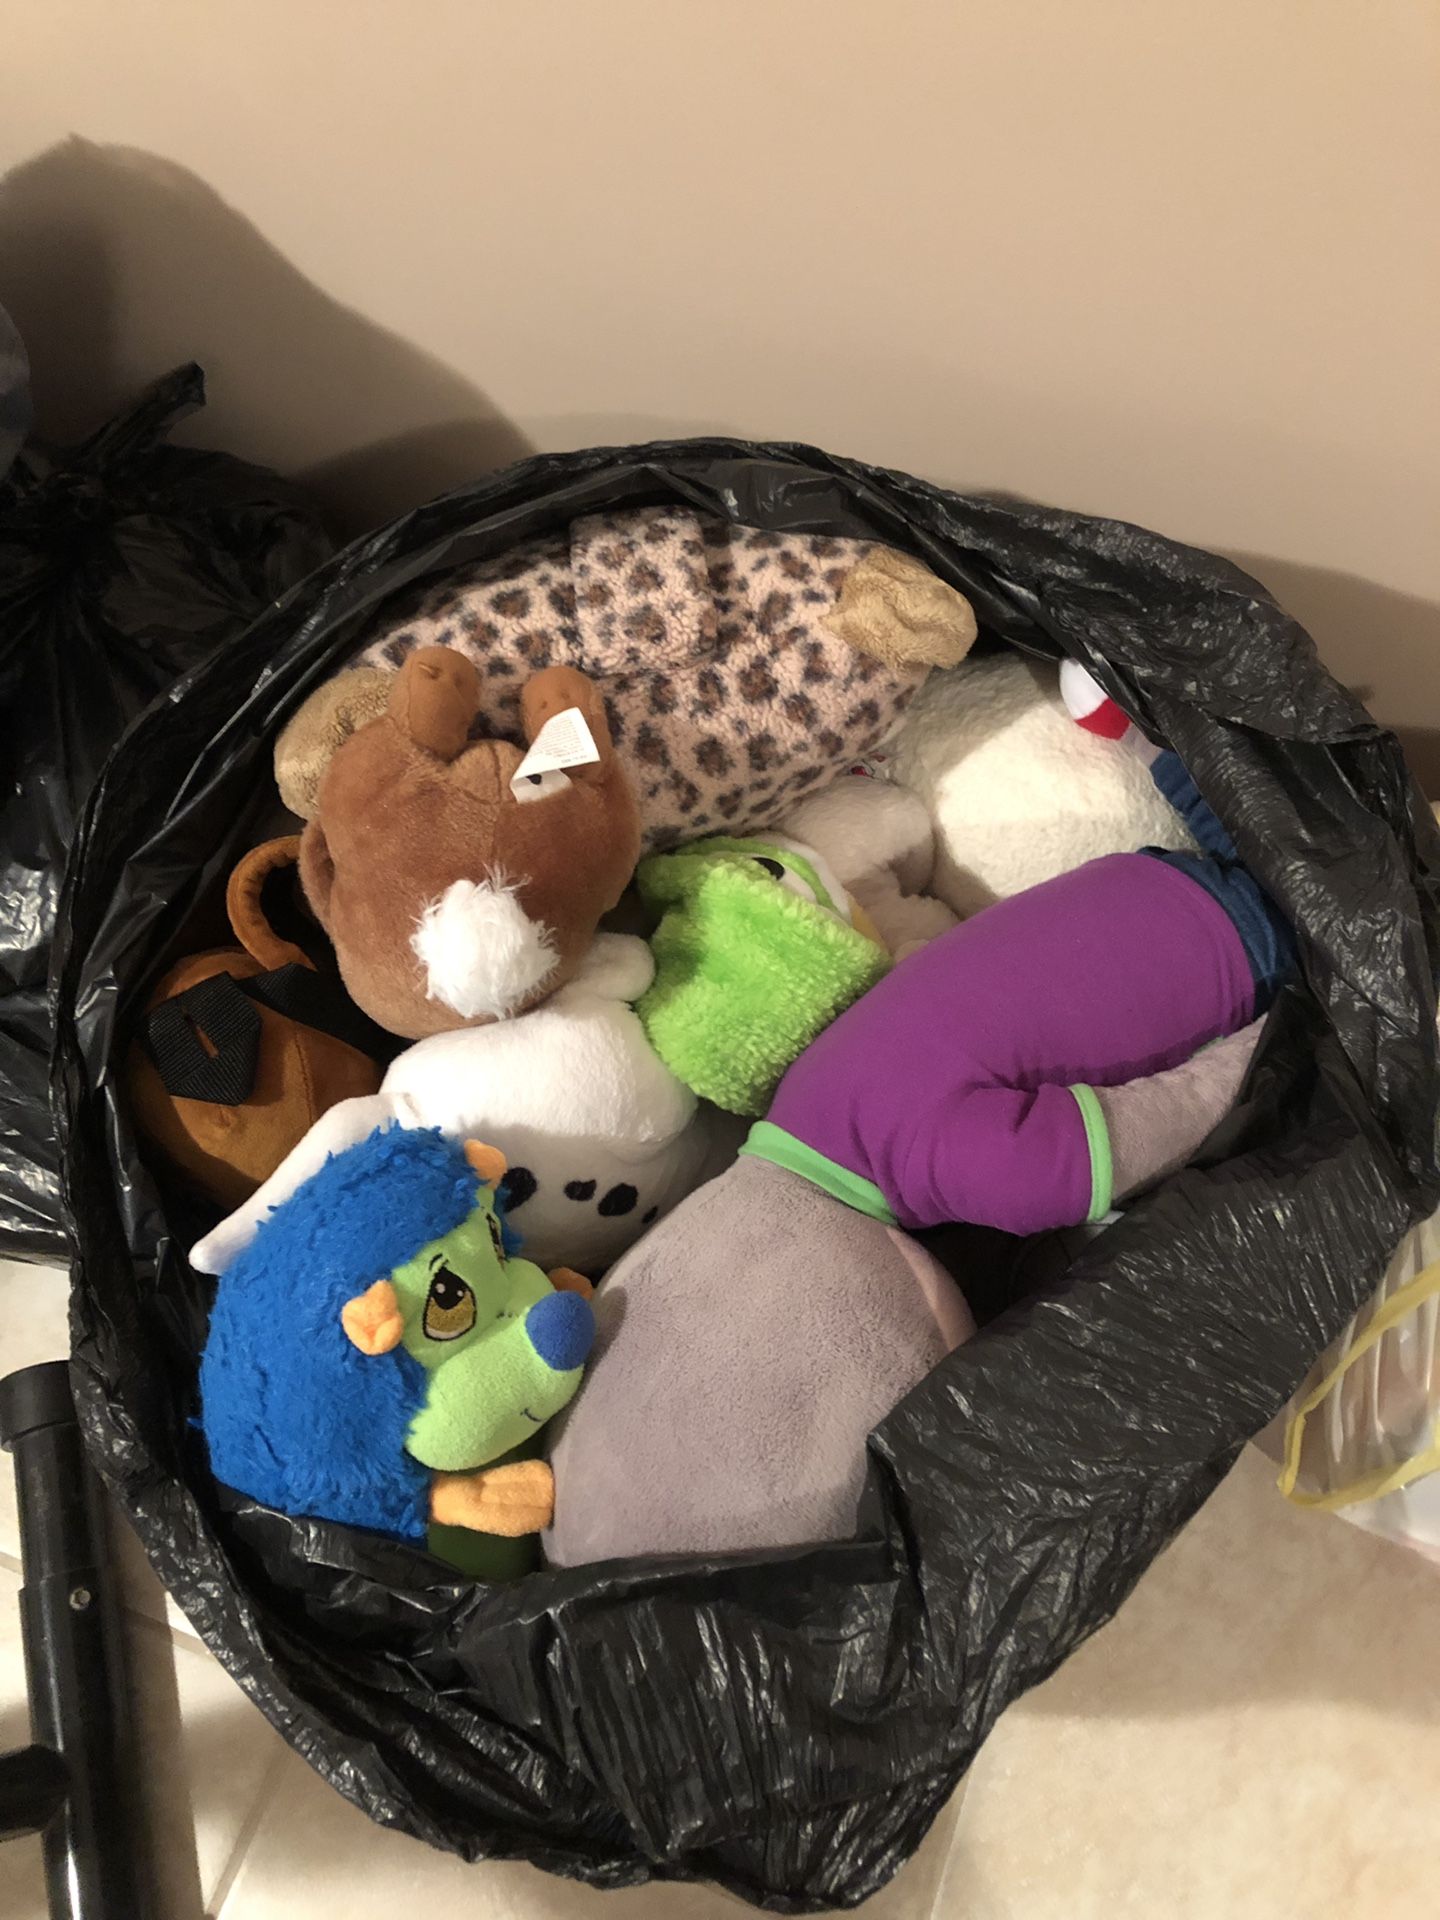 Assorted toys/stuffed animals